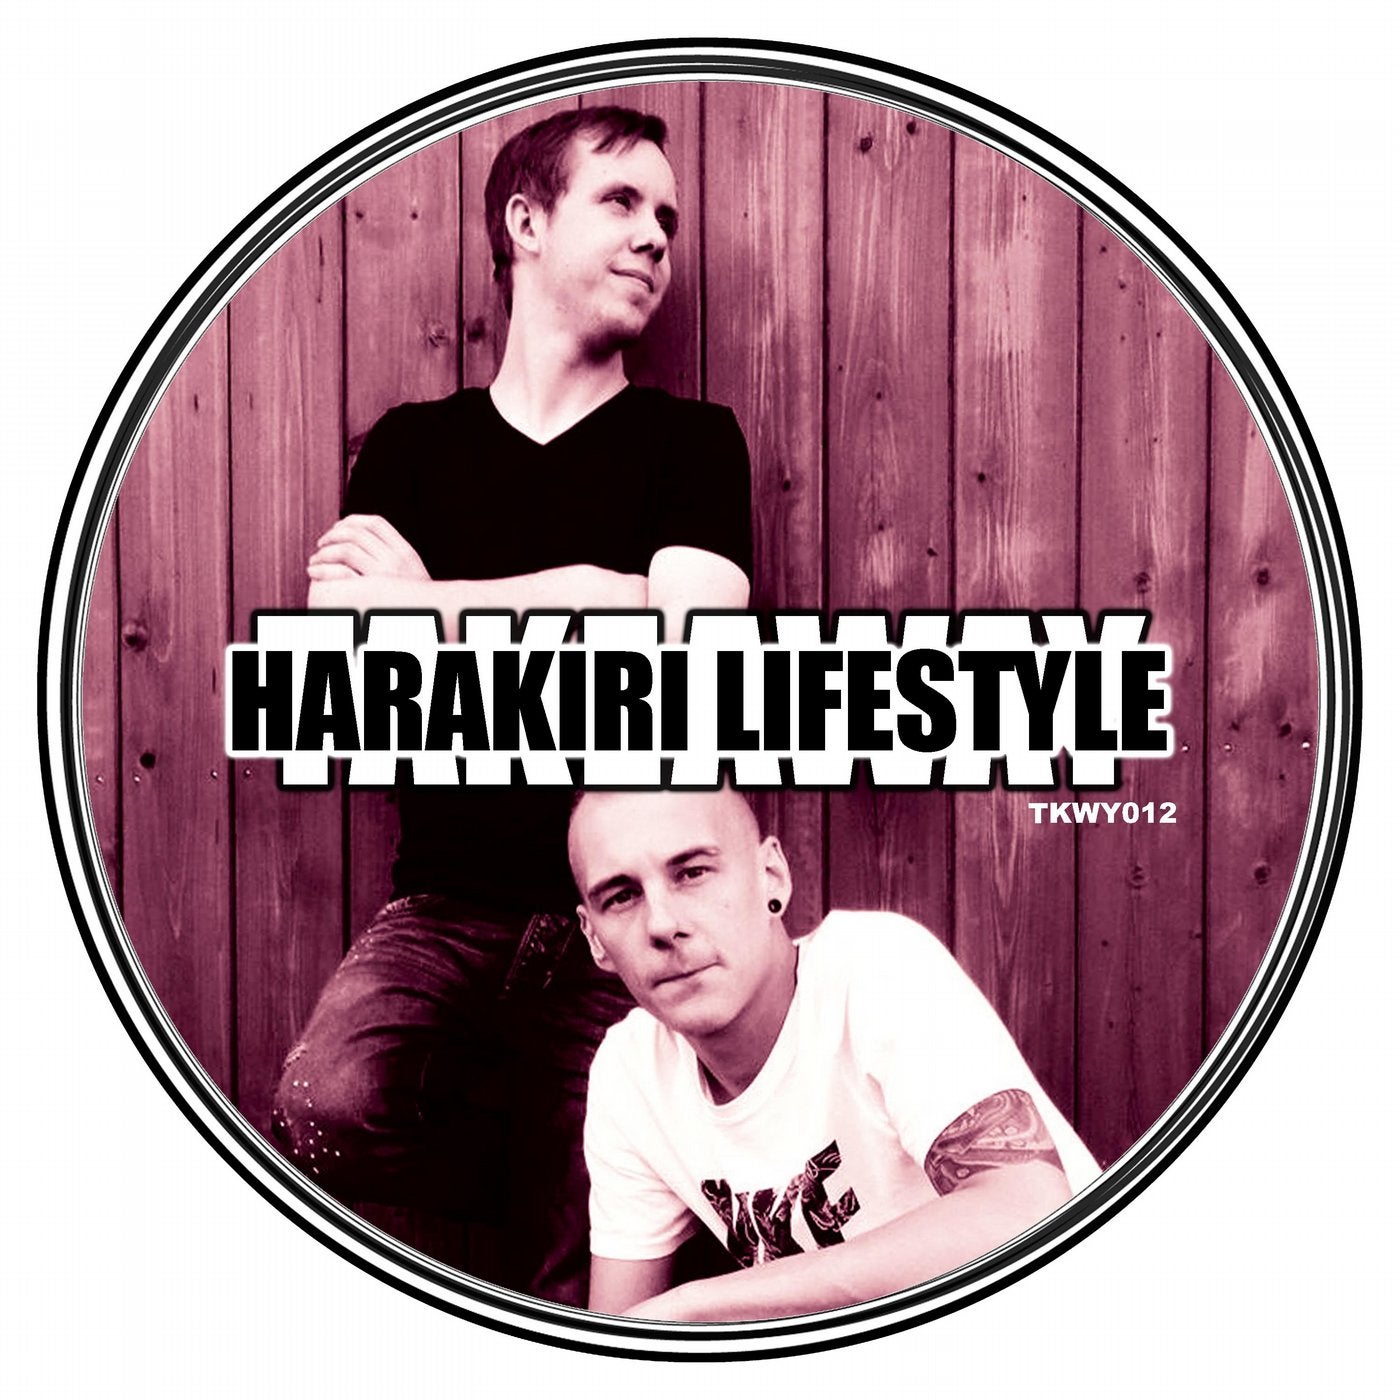 Harakiri Lifestyle